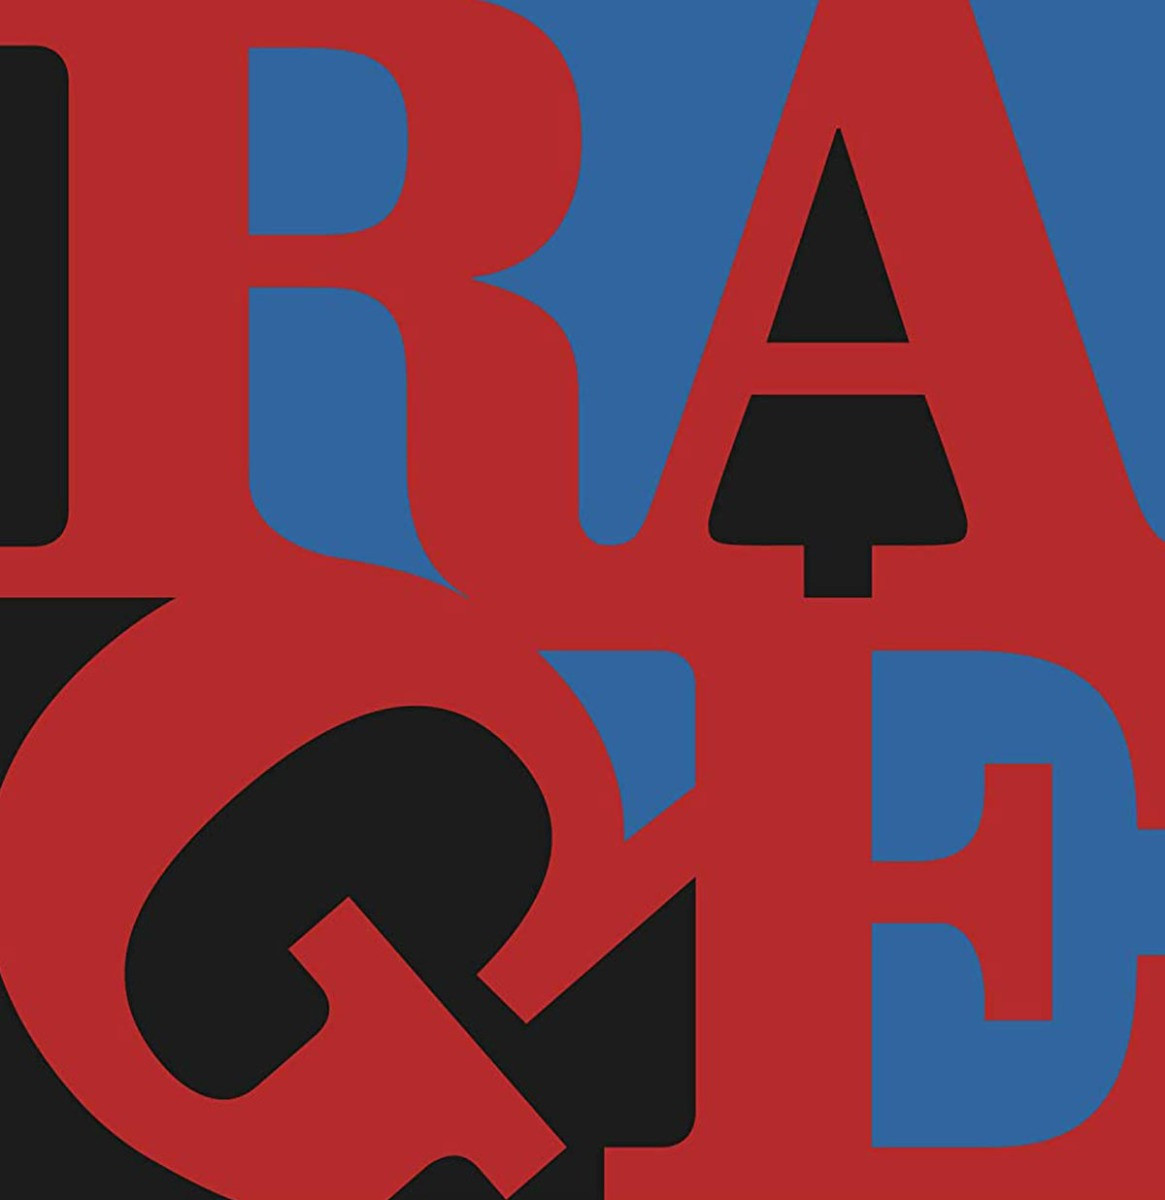 Rage Against The Machine - Renegades LP